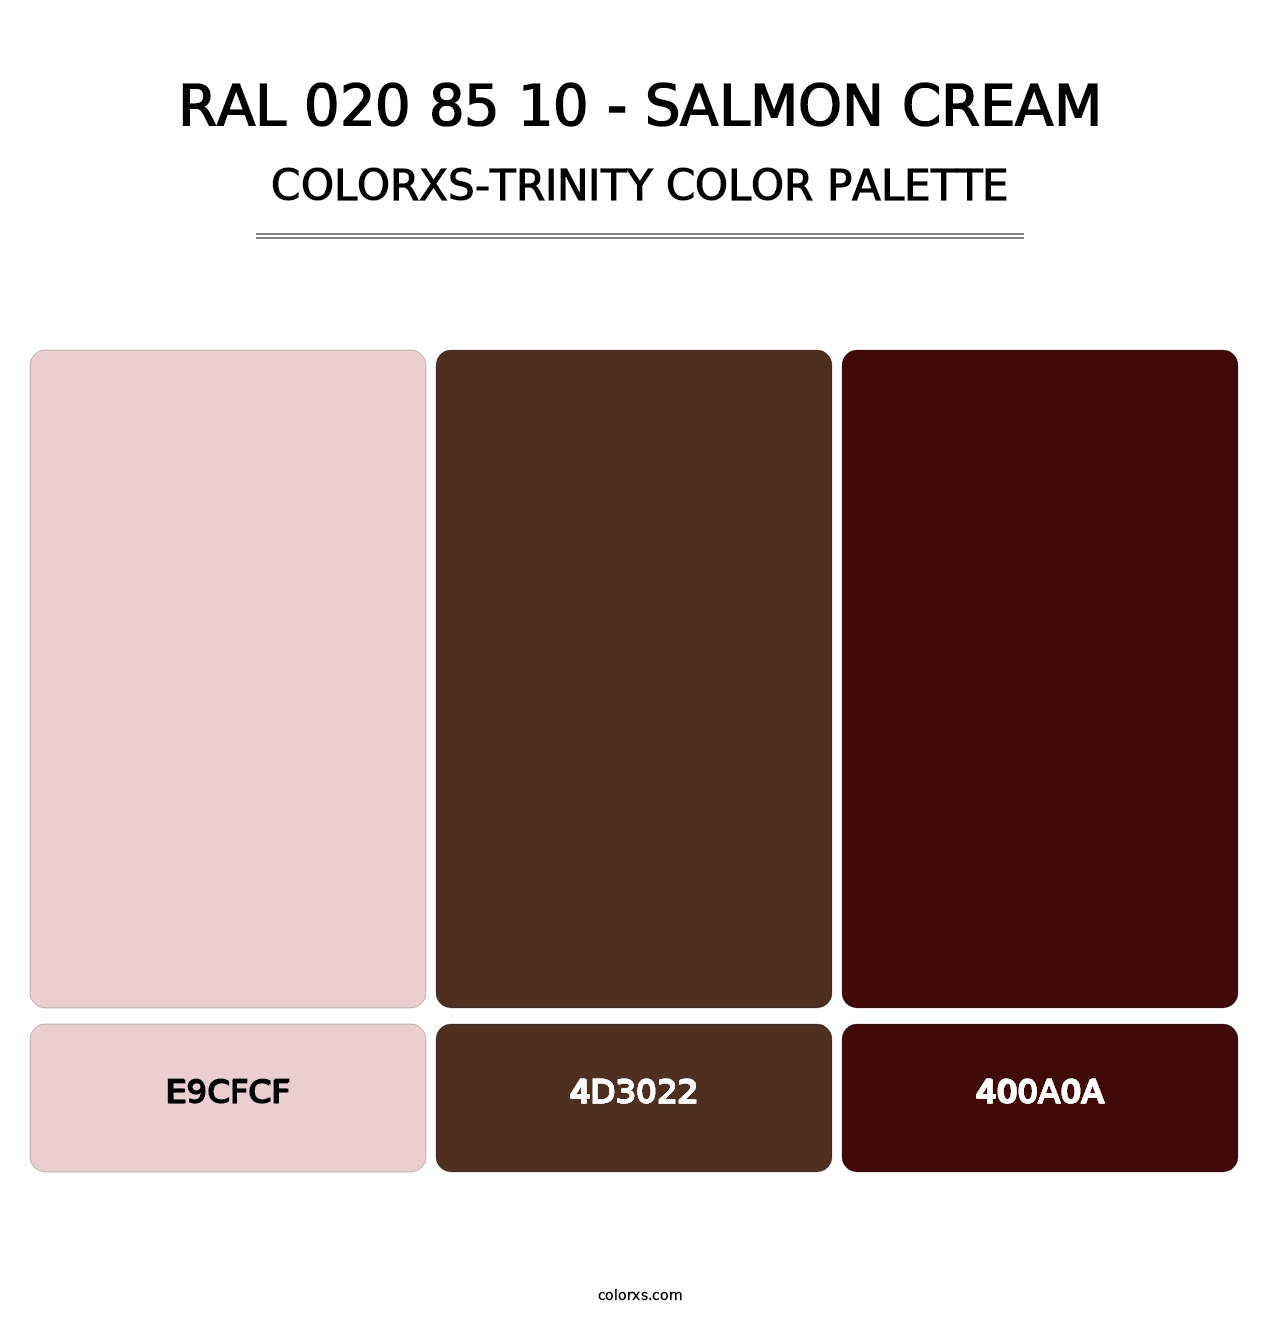 RAL 020 85 10 - Salmon Cream - Colorxs Trinity Palette